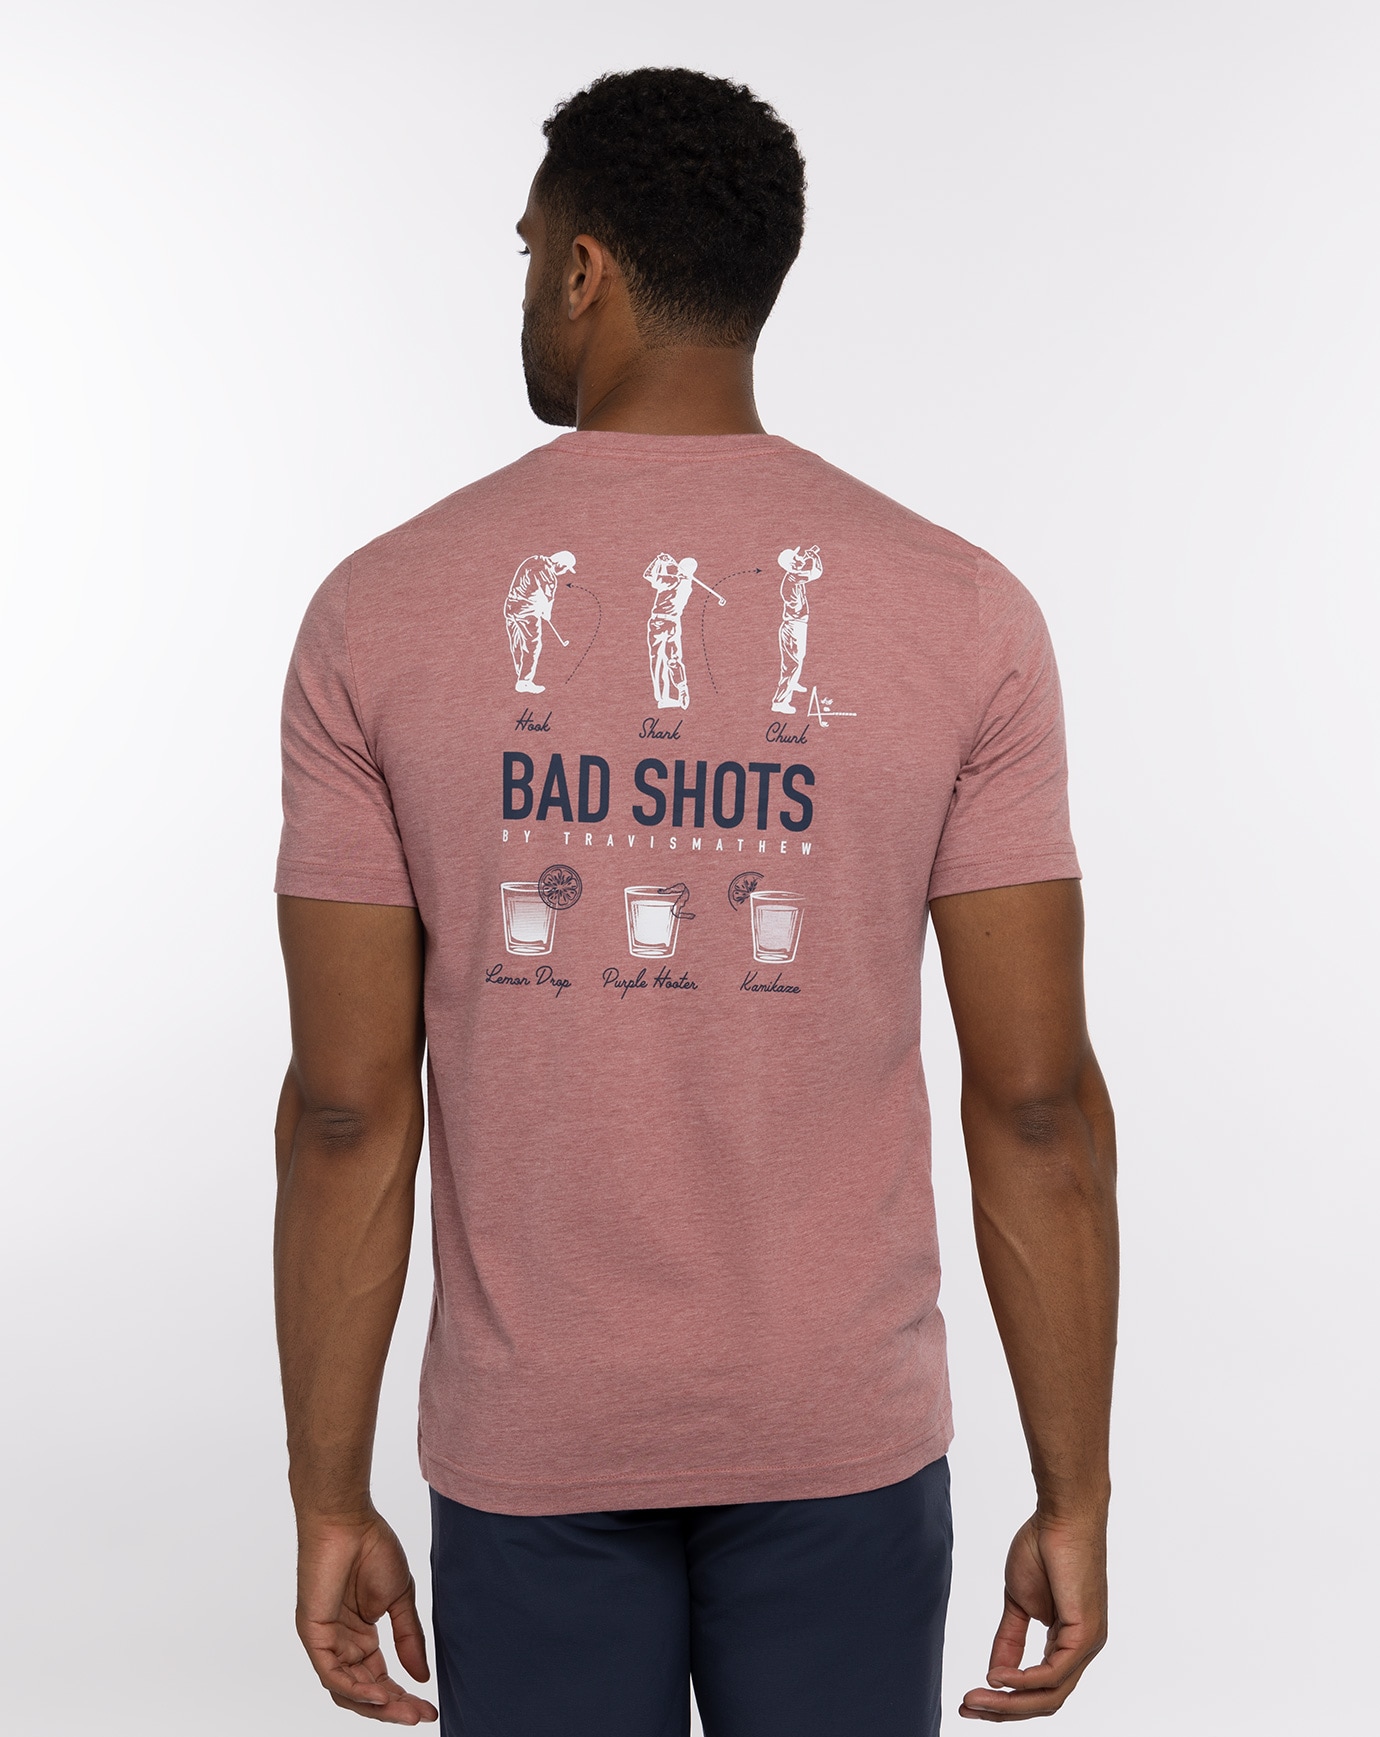 Hook & Tackle Men's Star Spangled Long Sleeve Fishing T-Shirt 